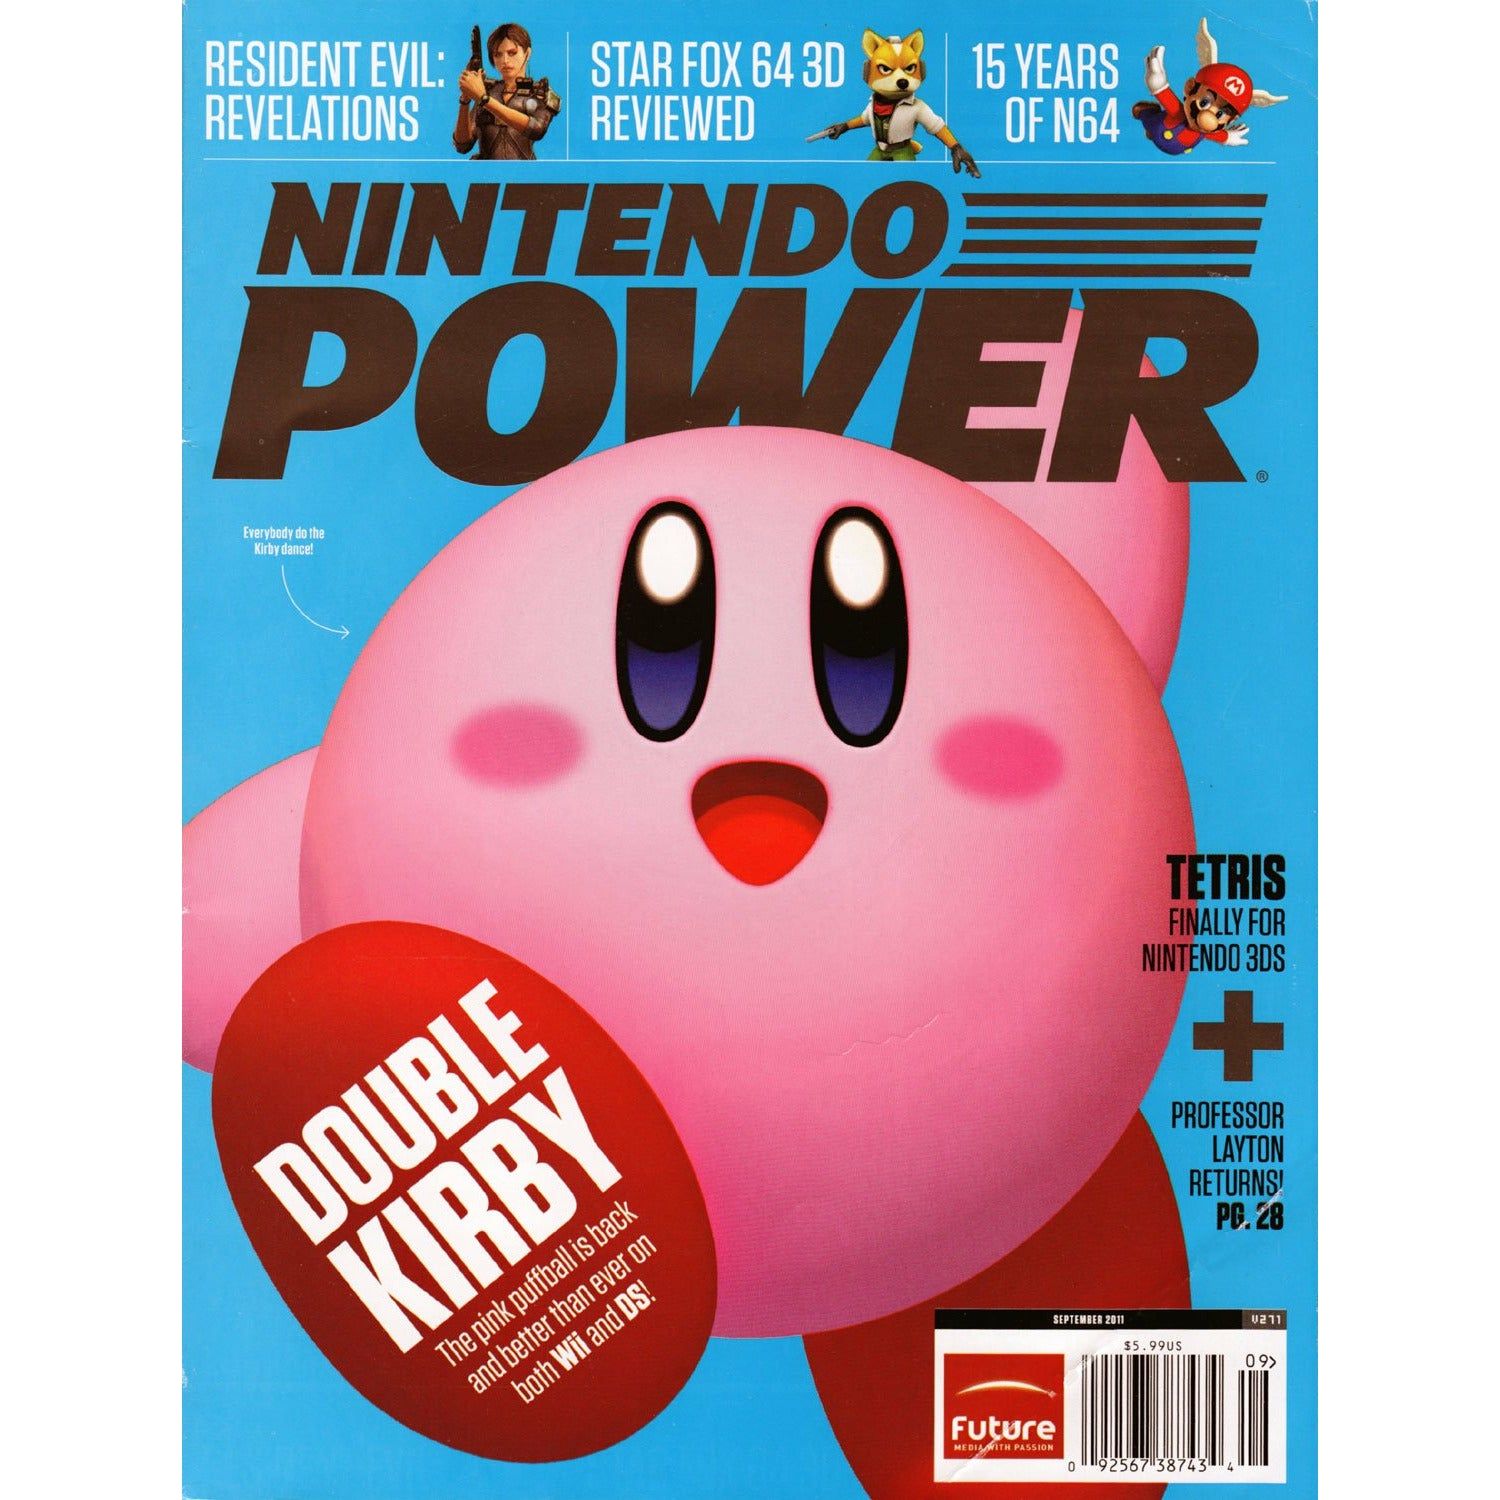 Nintendo Power Magazine (#271 Subscriber Edition) - Complet et/ou bon état